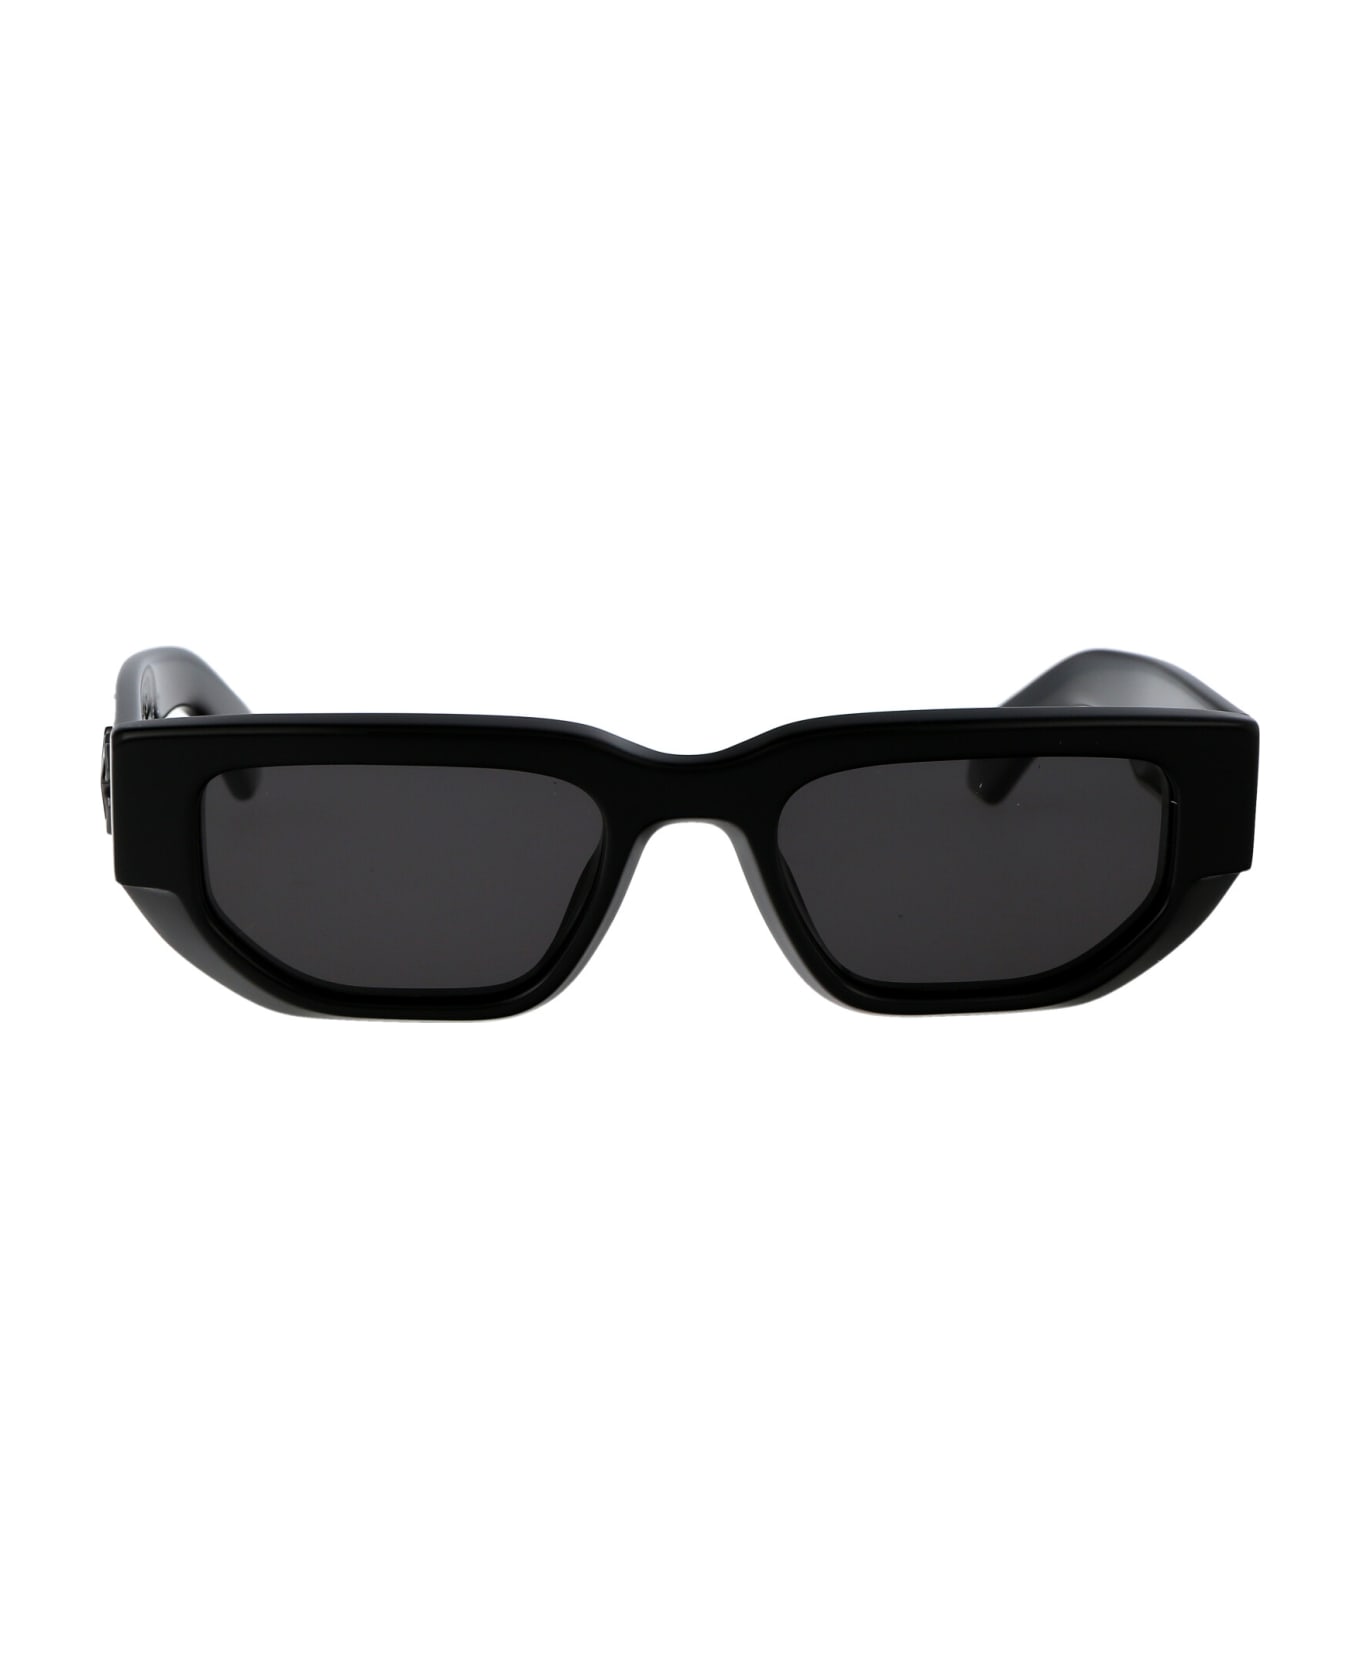 Off-White Greeley Sunglasses - 1007 BLACK